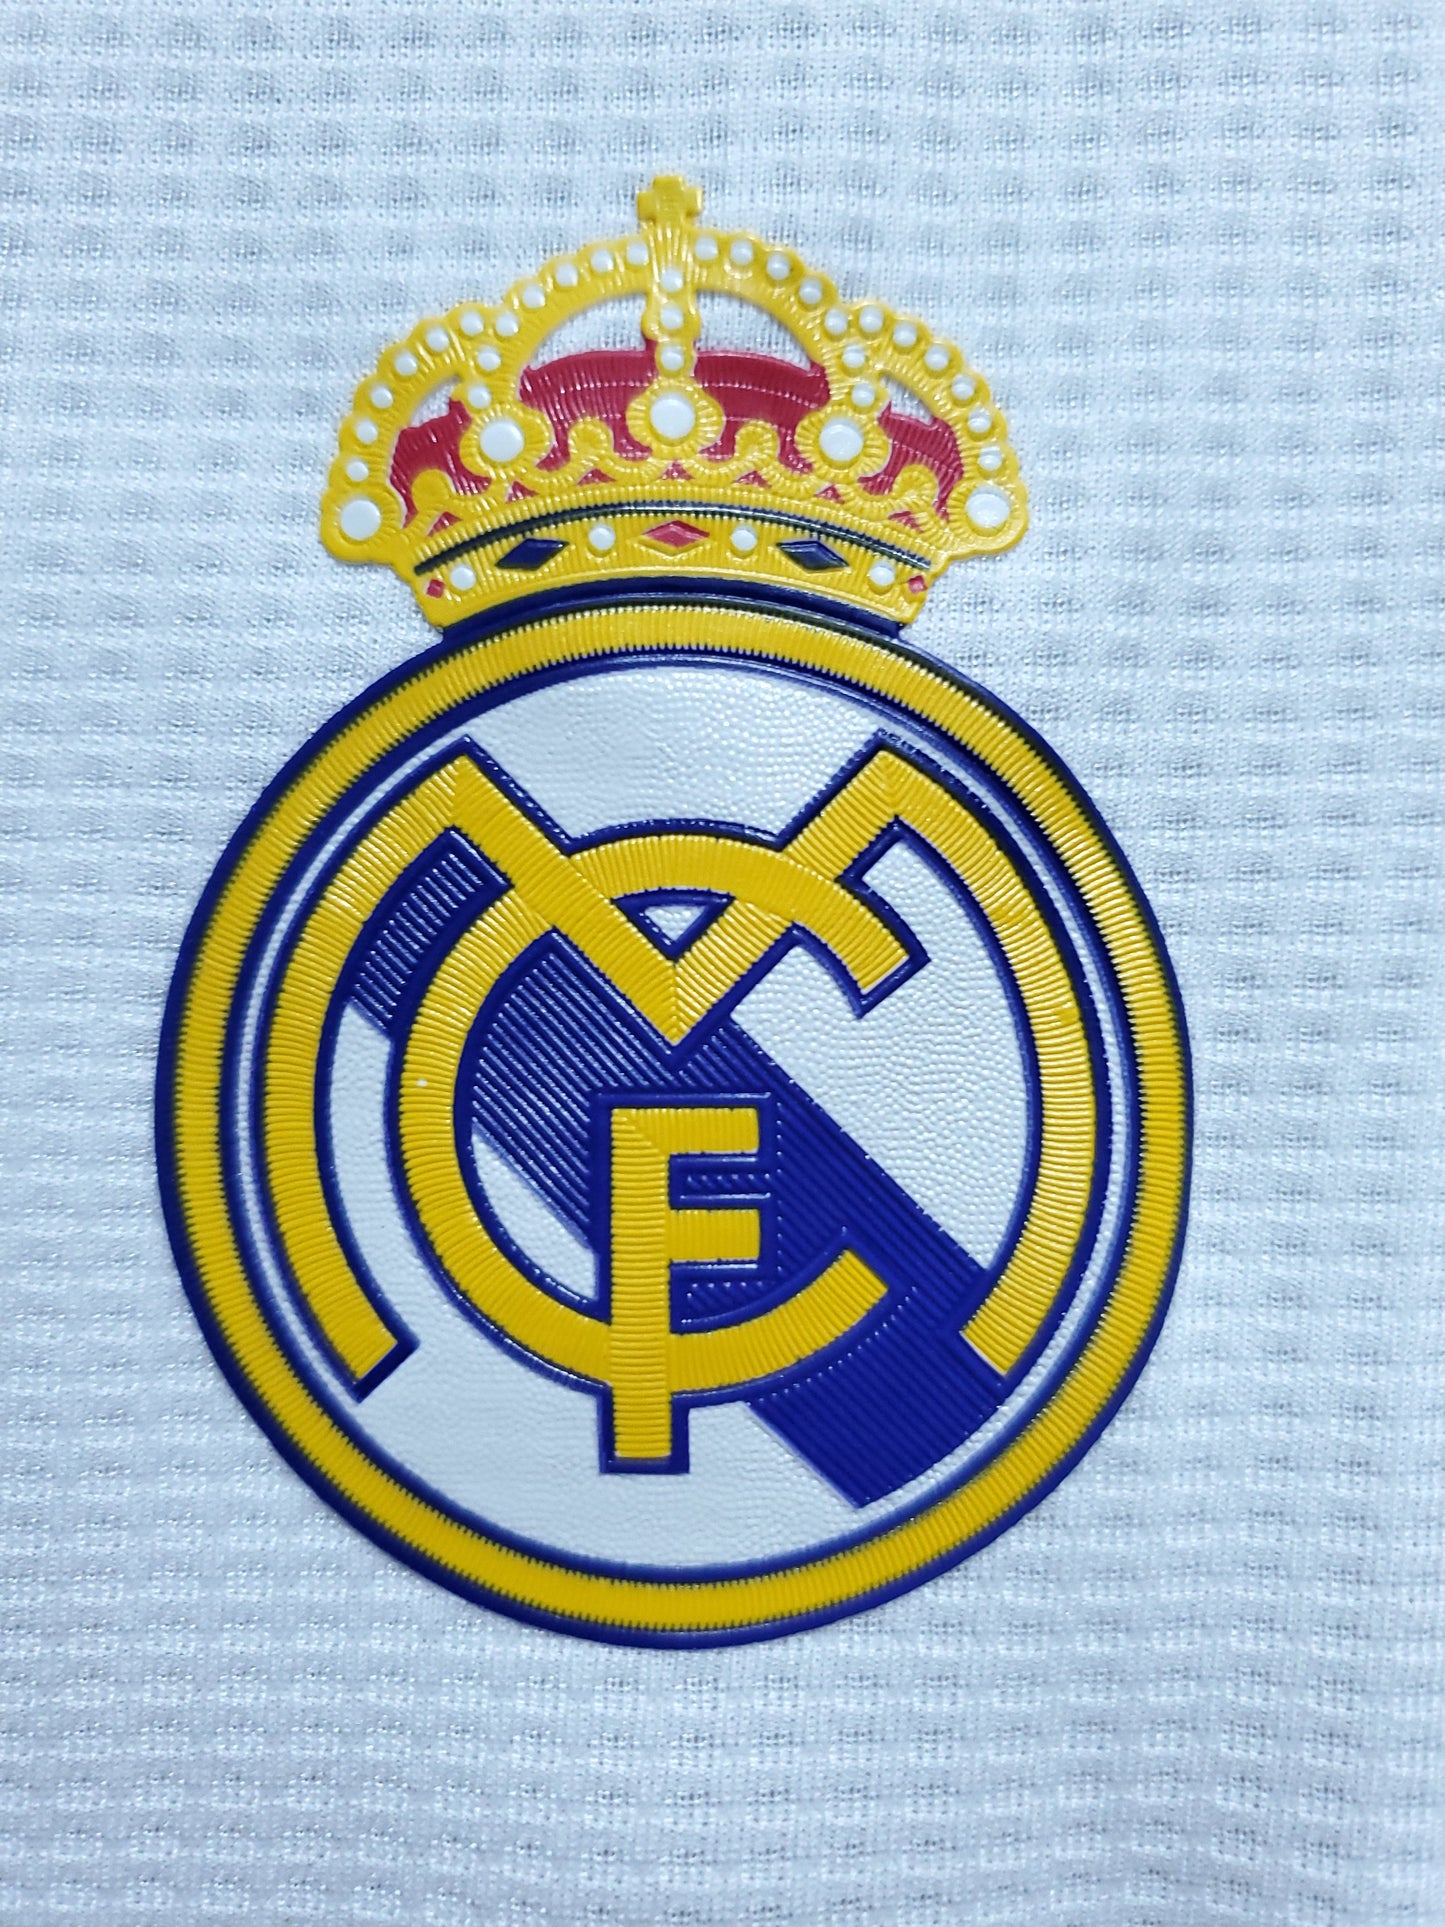 Retro Real Madrid 15-16 Home Kit